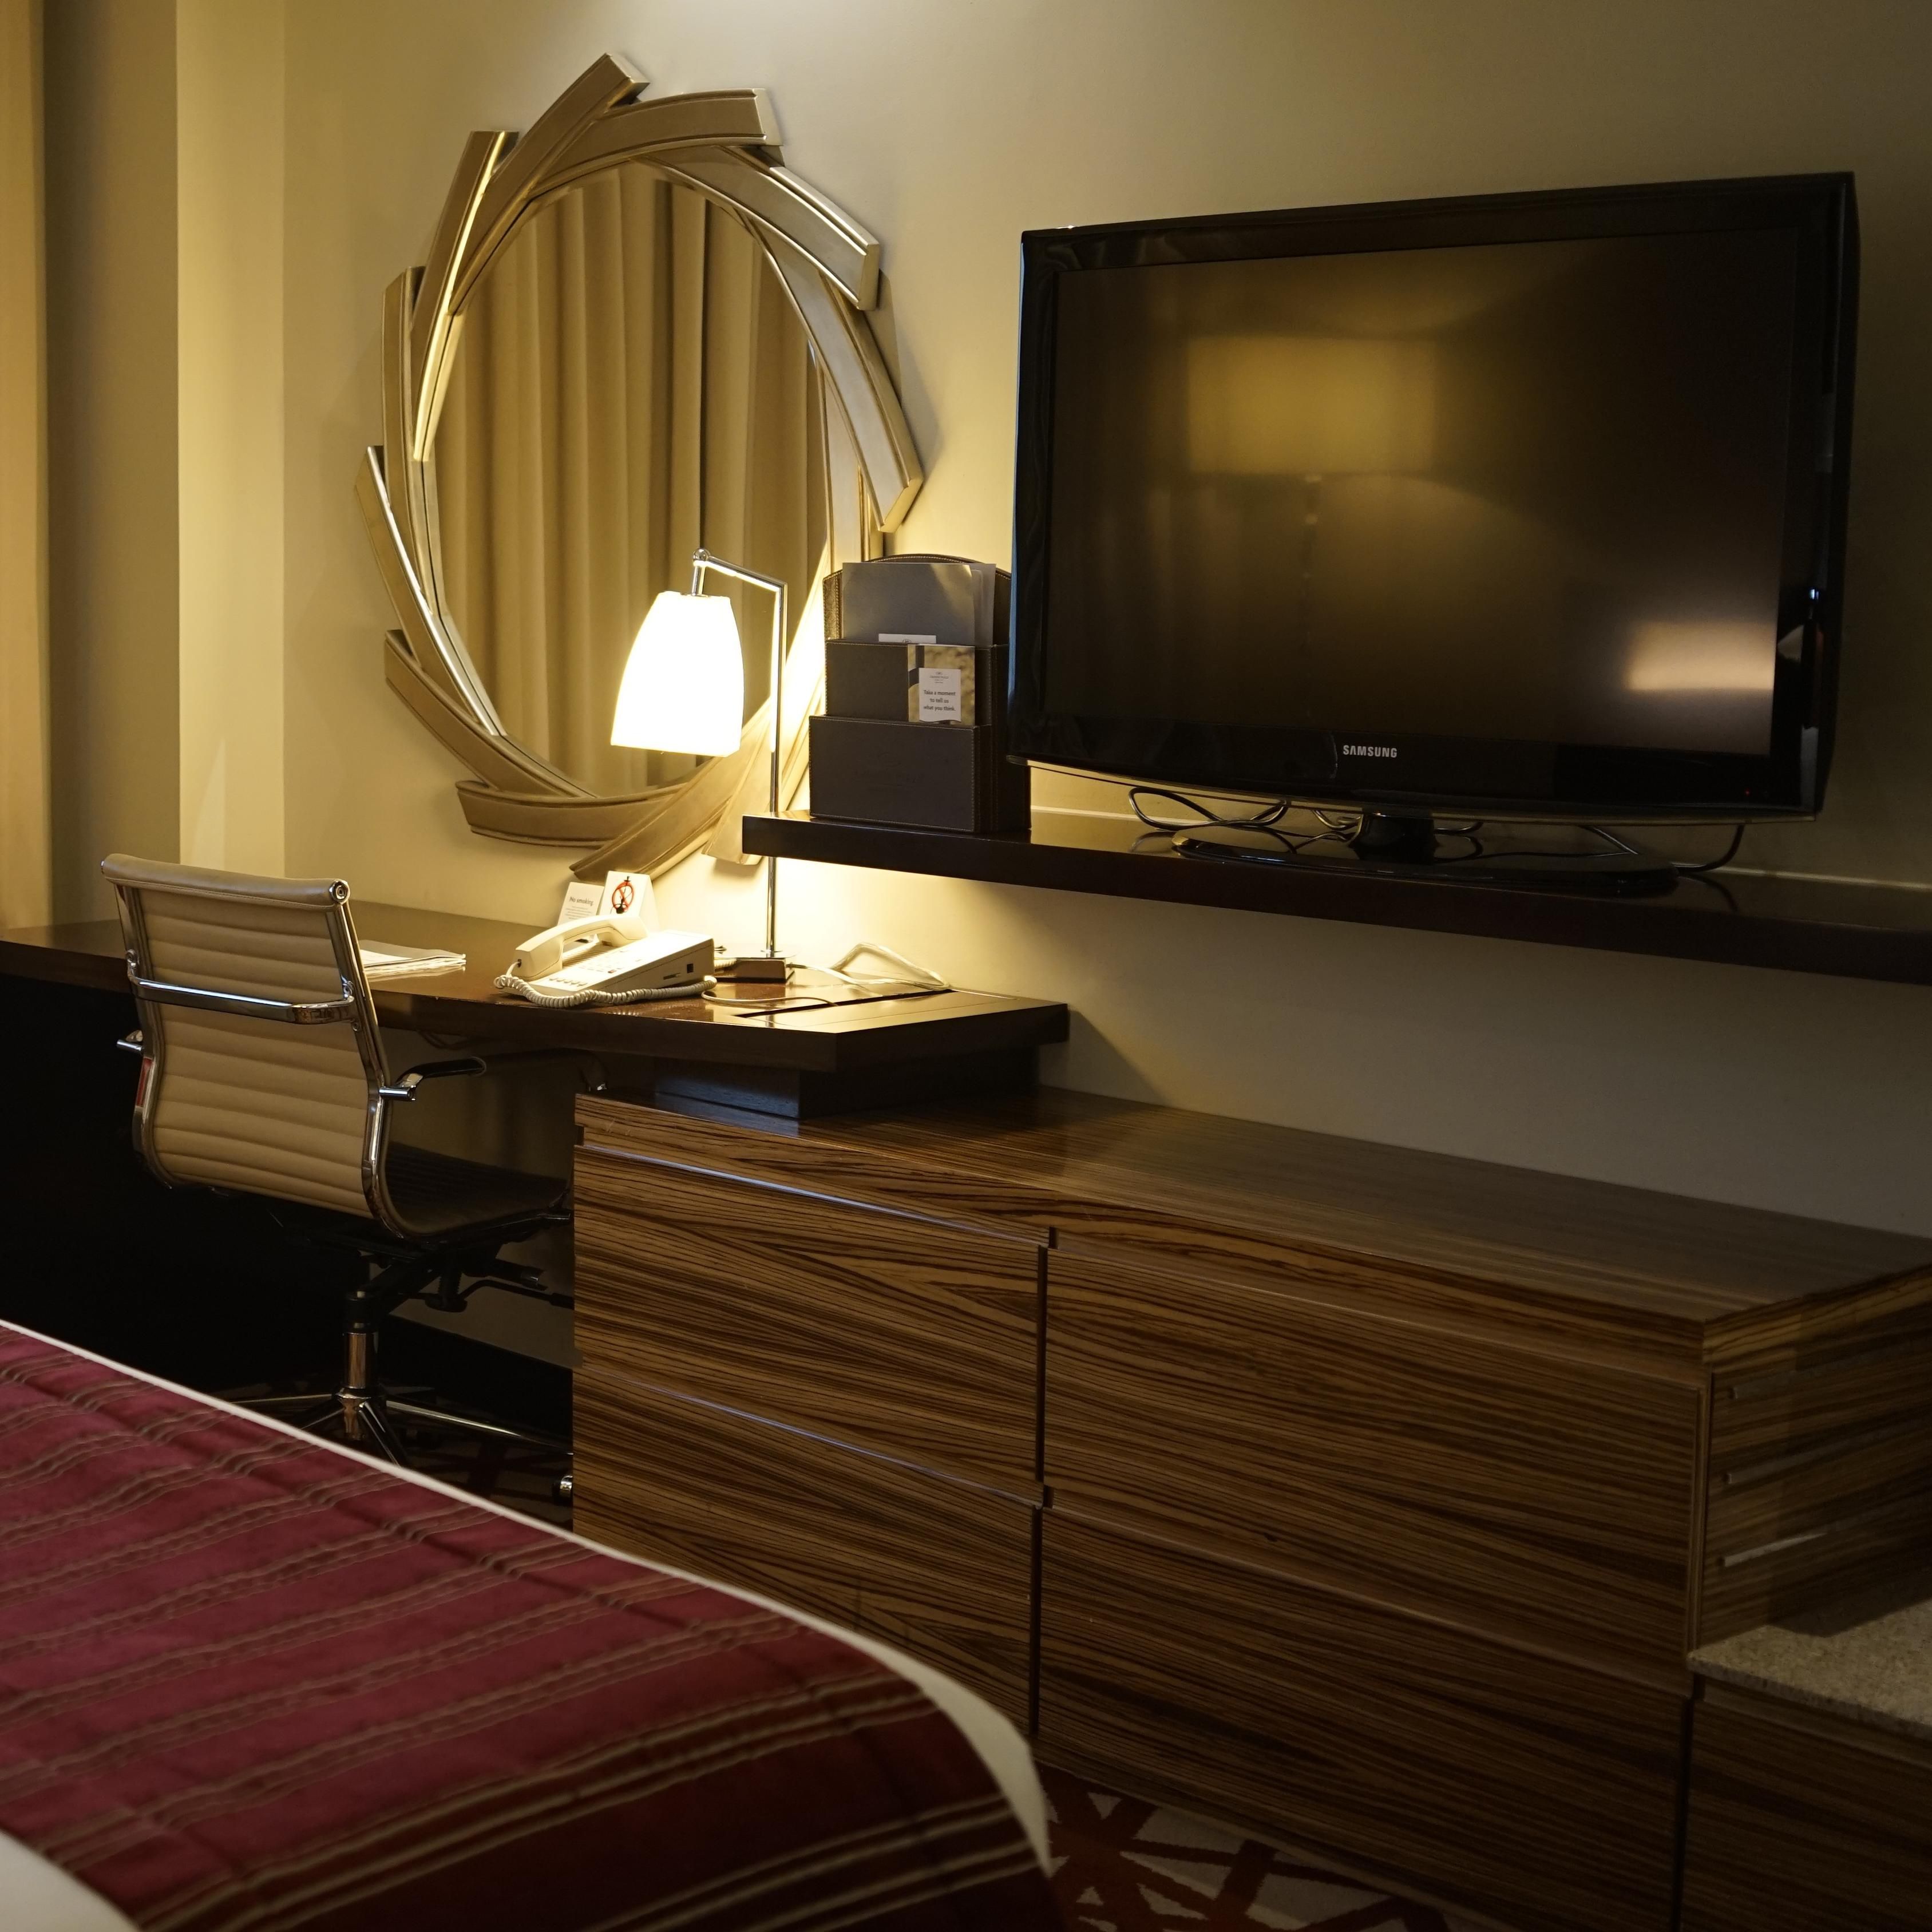 Crowne Plaza Dubai-Deira - 5 star hotel - LED TV &amp; Working Desk